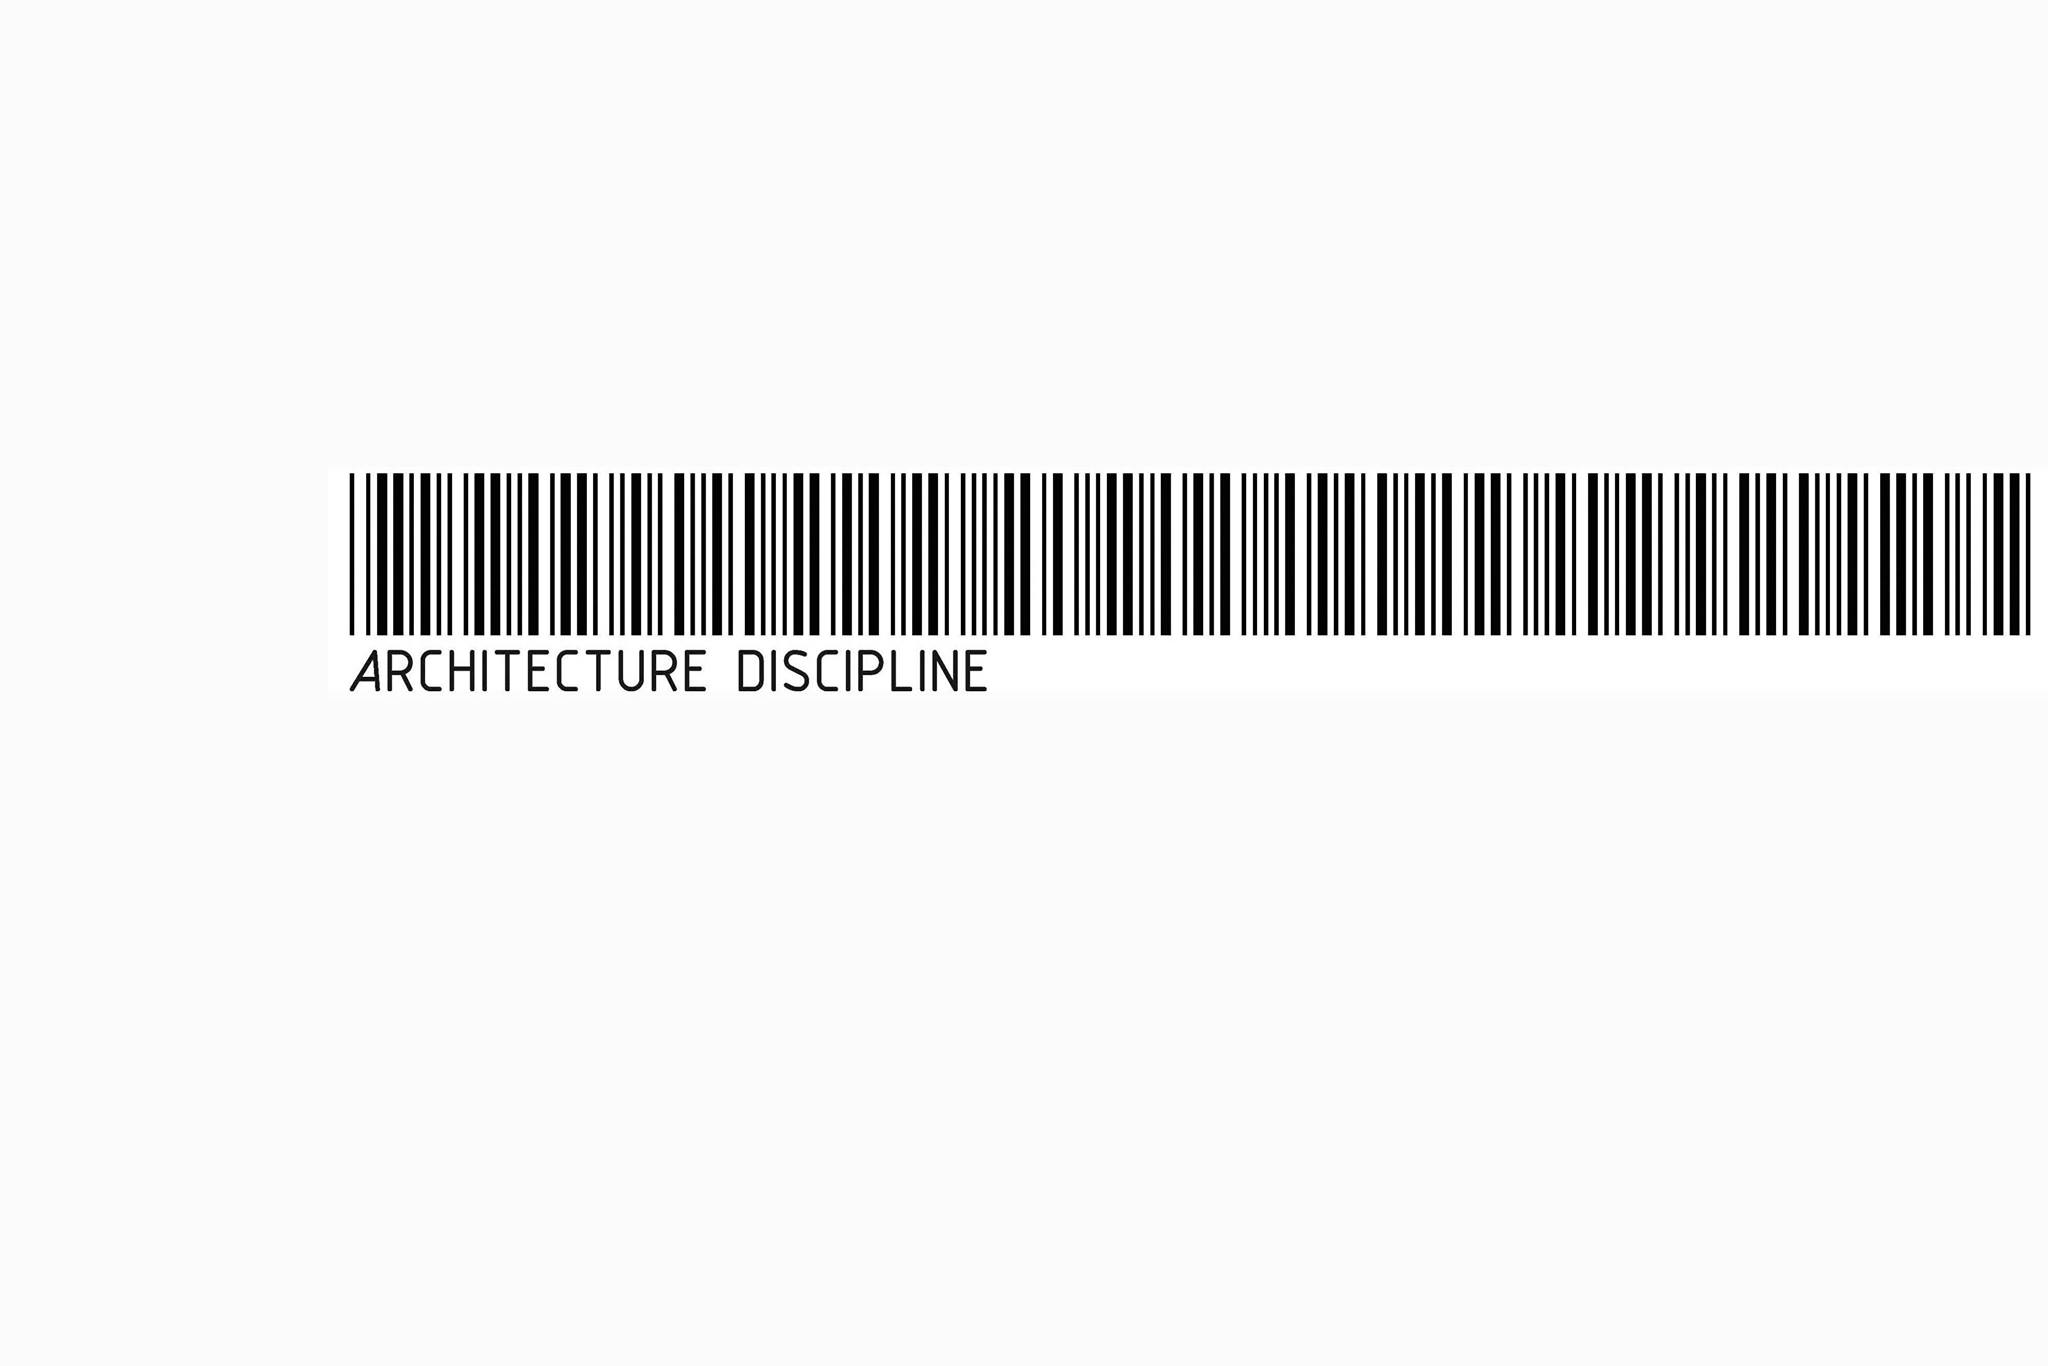 Architecture Discipline|Architect|Professional Services